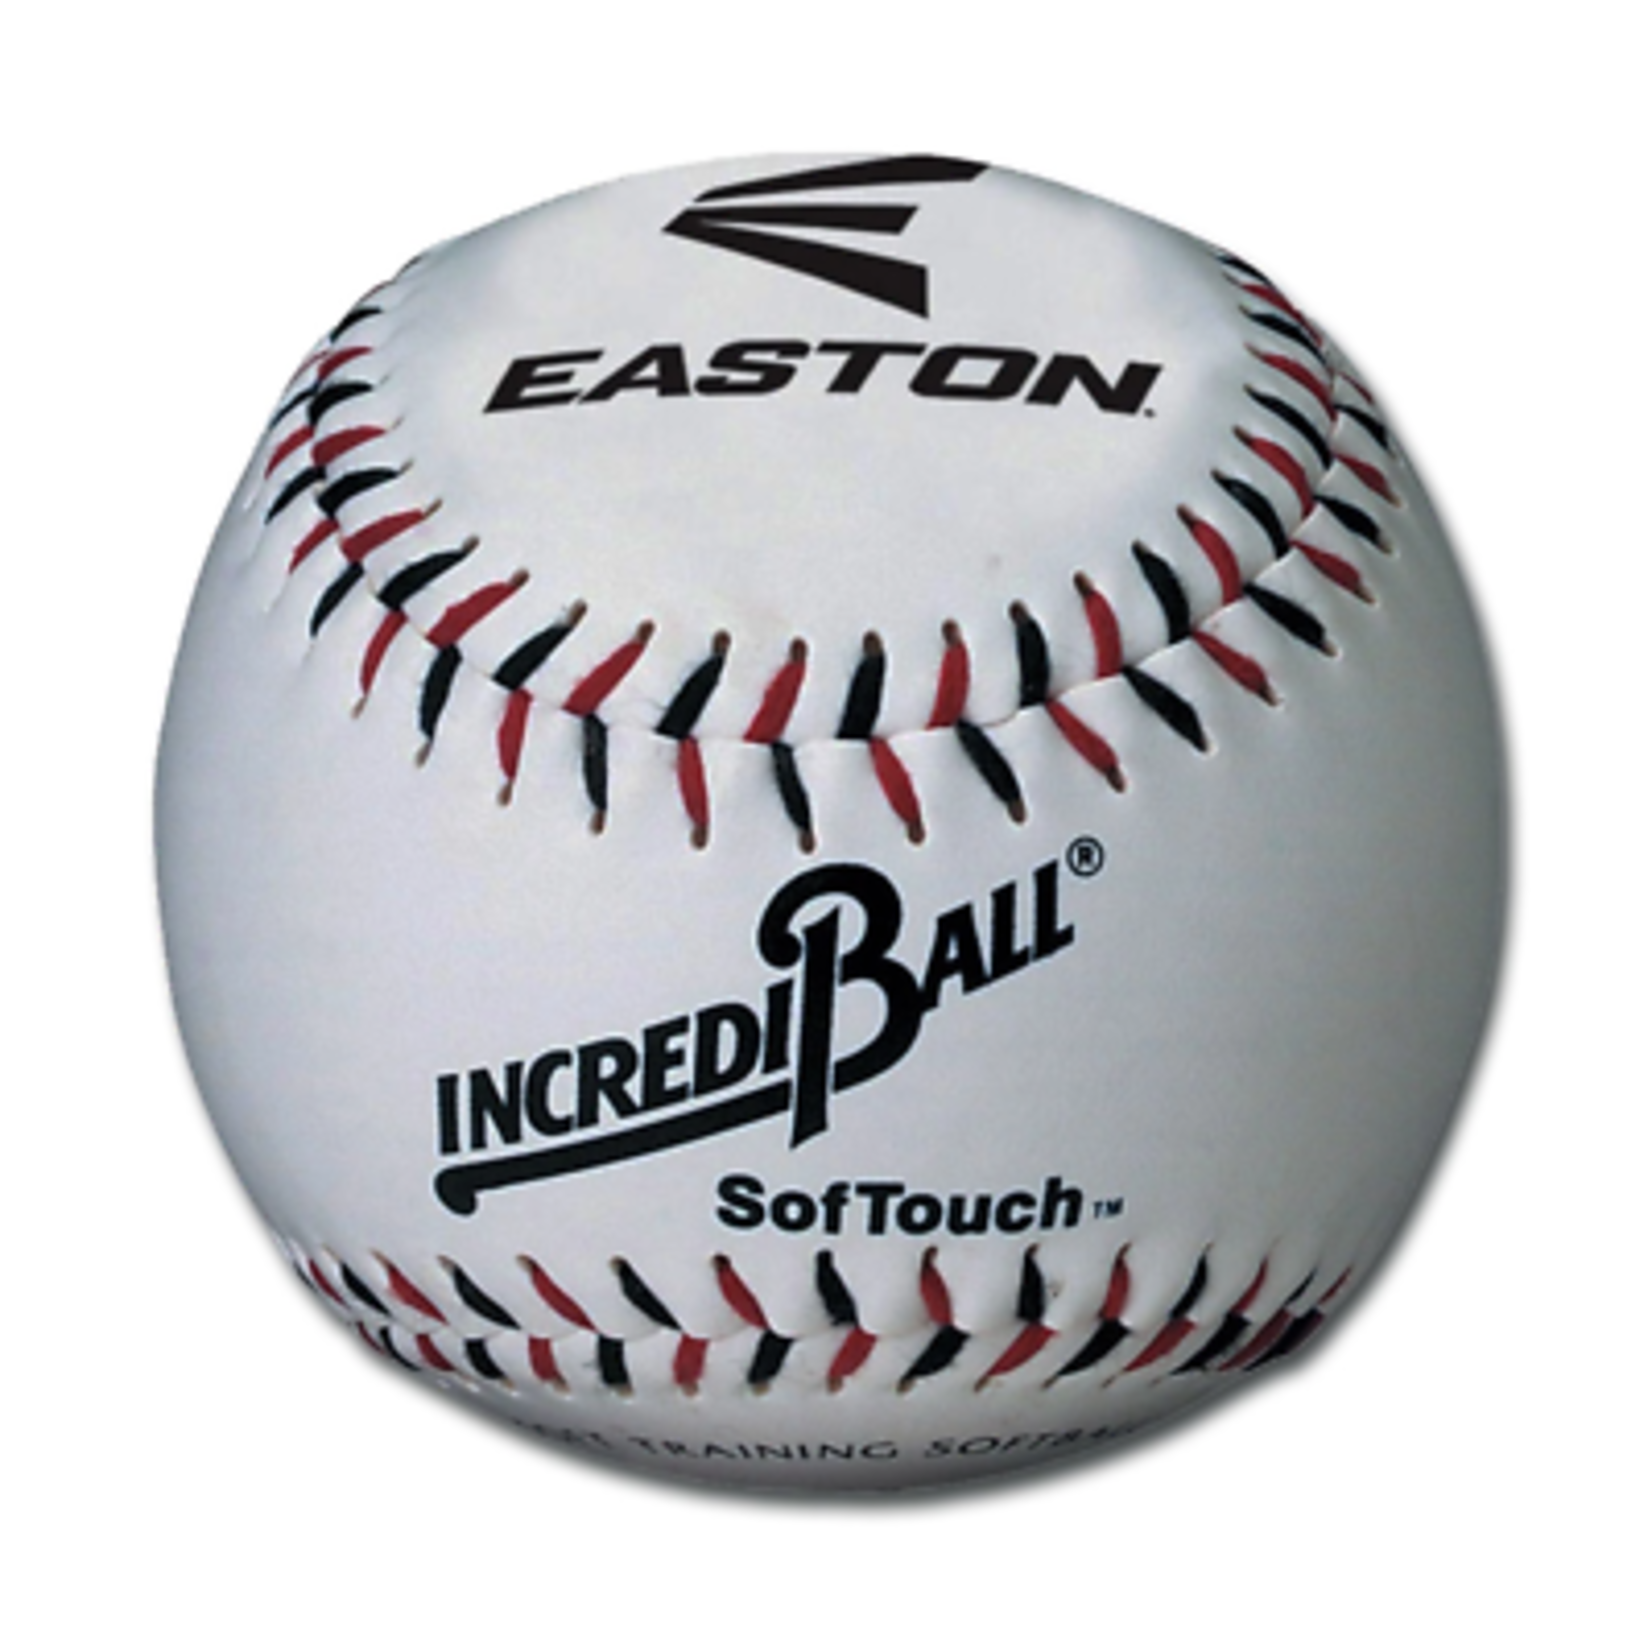 Easton Easton Training Baseball, SoftTouch Incrediball, 9", Wht, 12-Pack